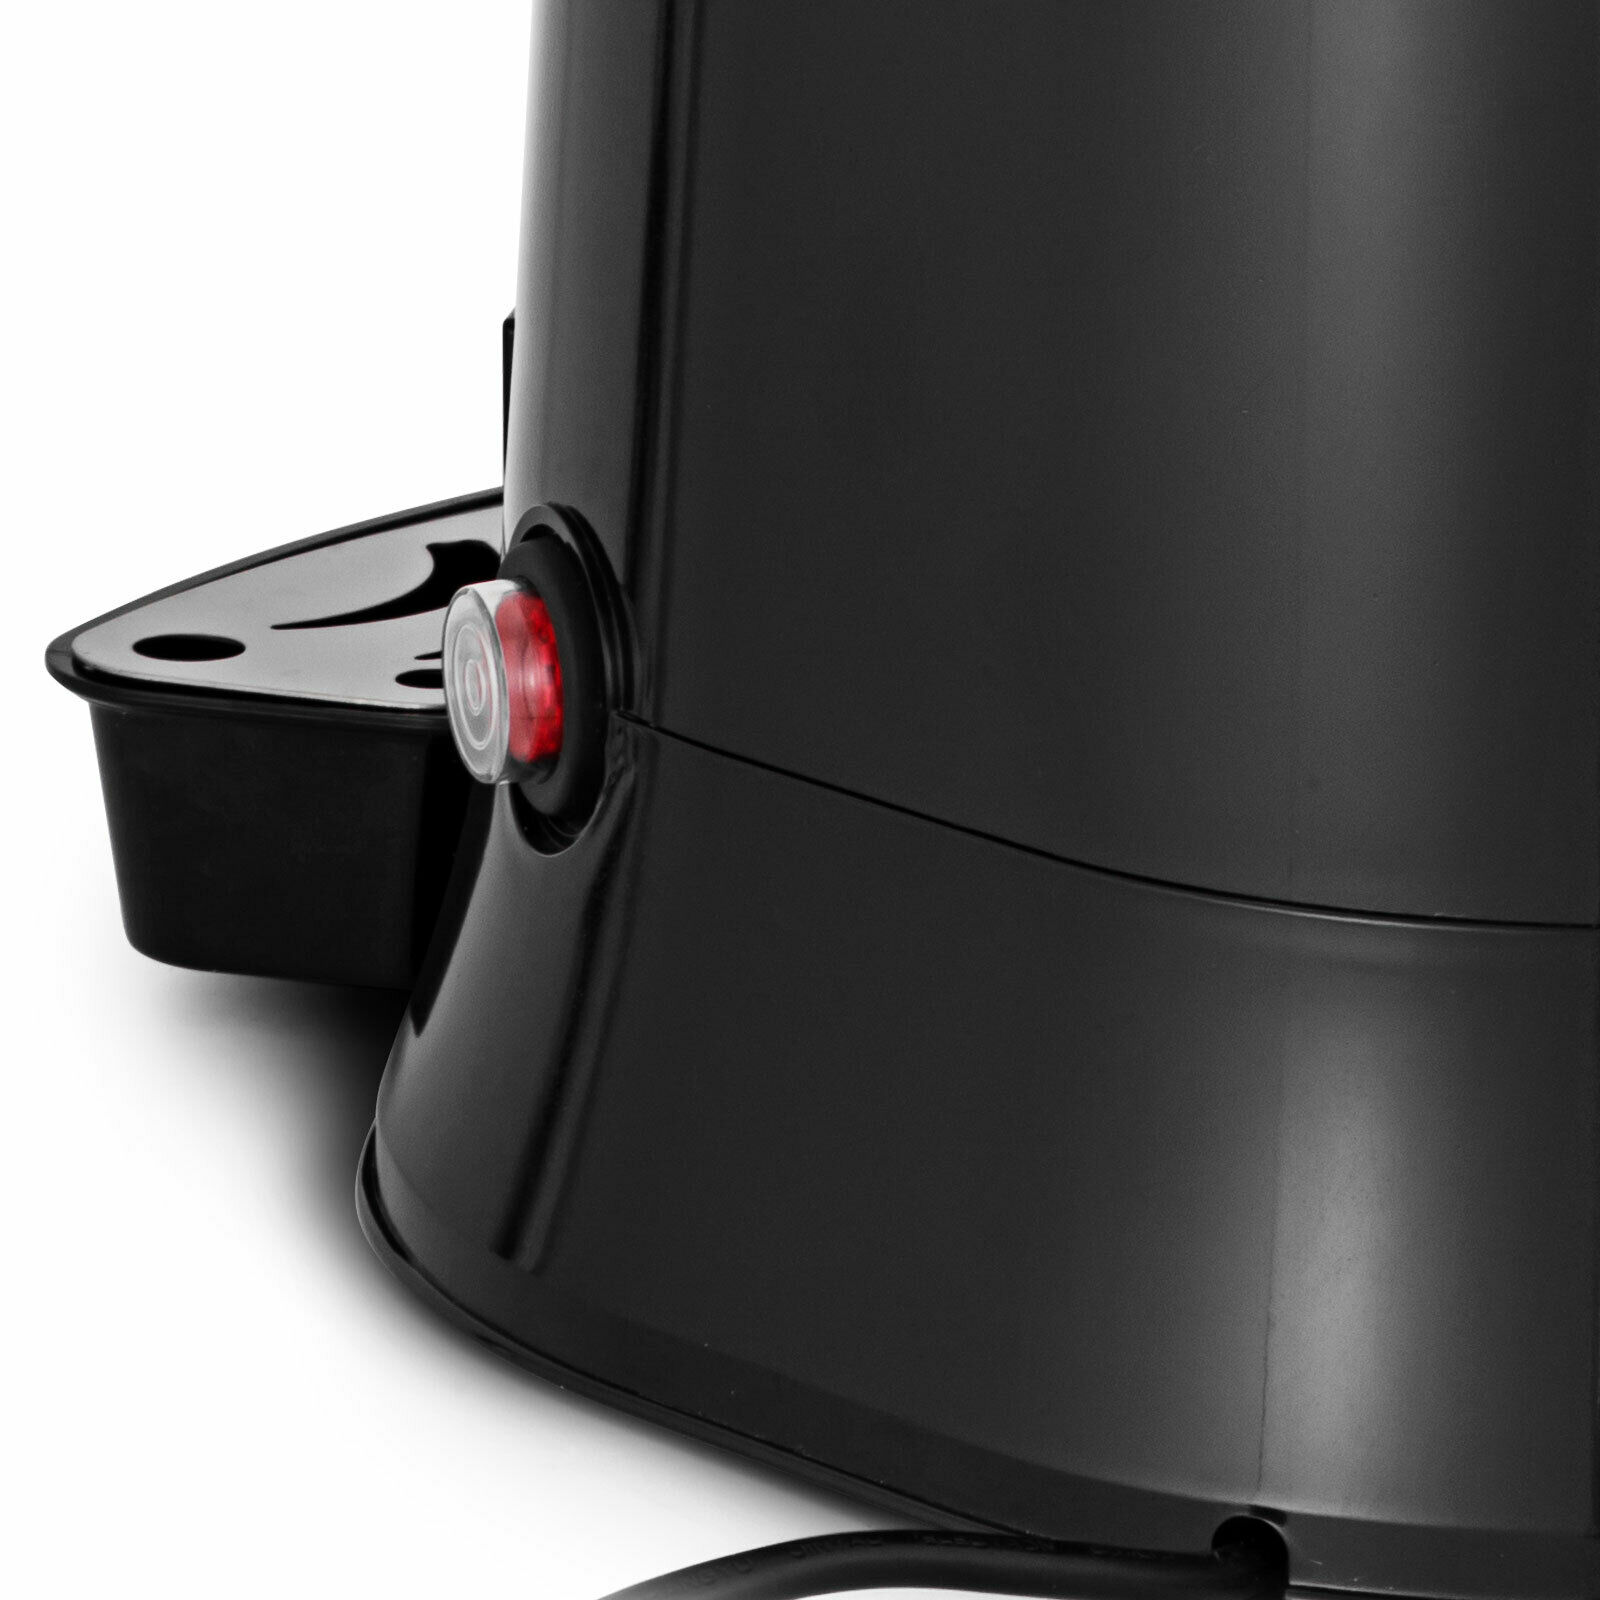 Empura HCD-10 10 Liter Hot Chocolate Dispenser - 120V, 1000W